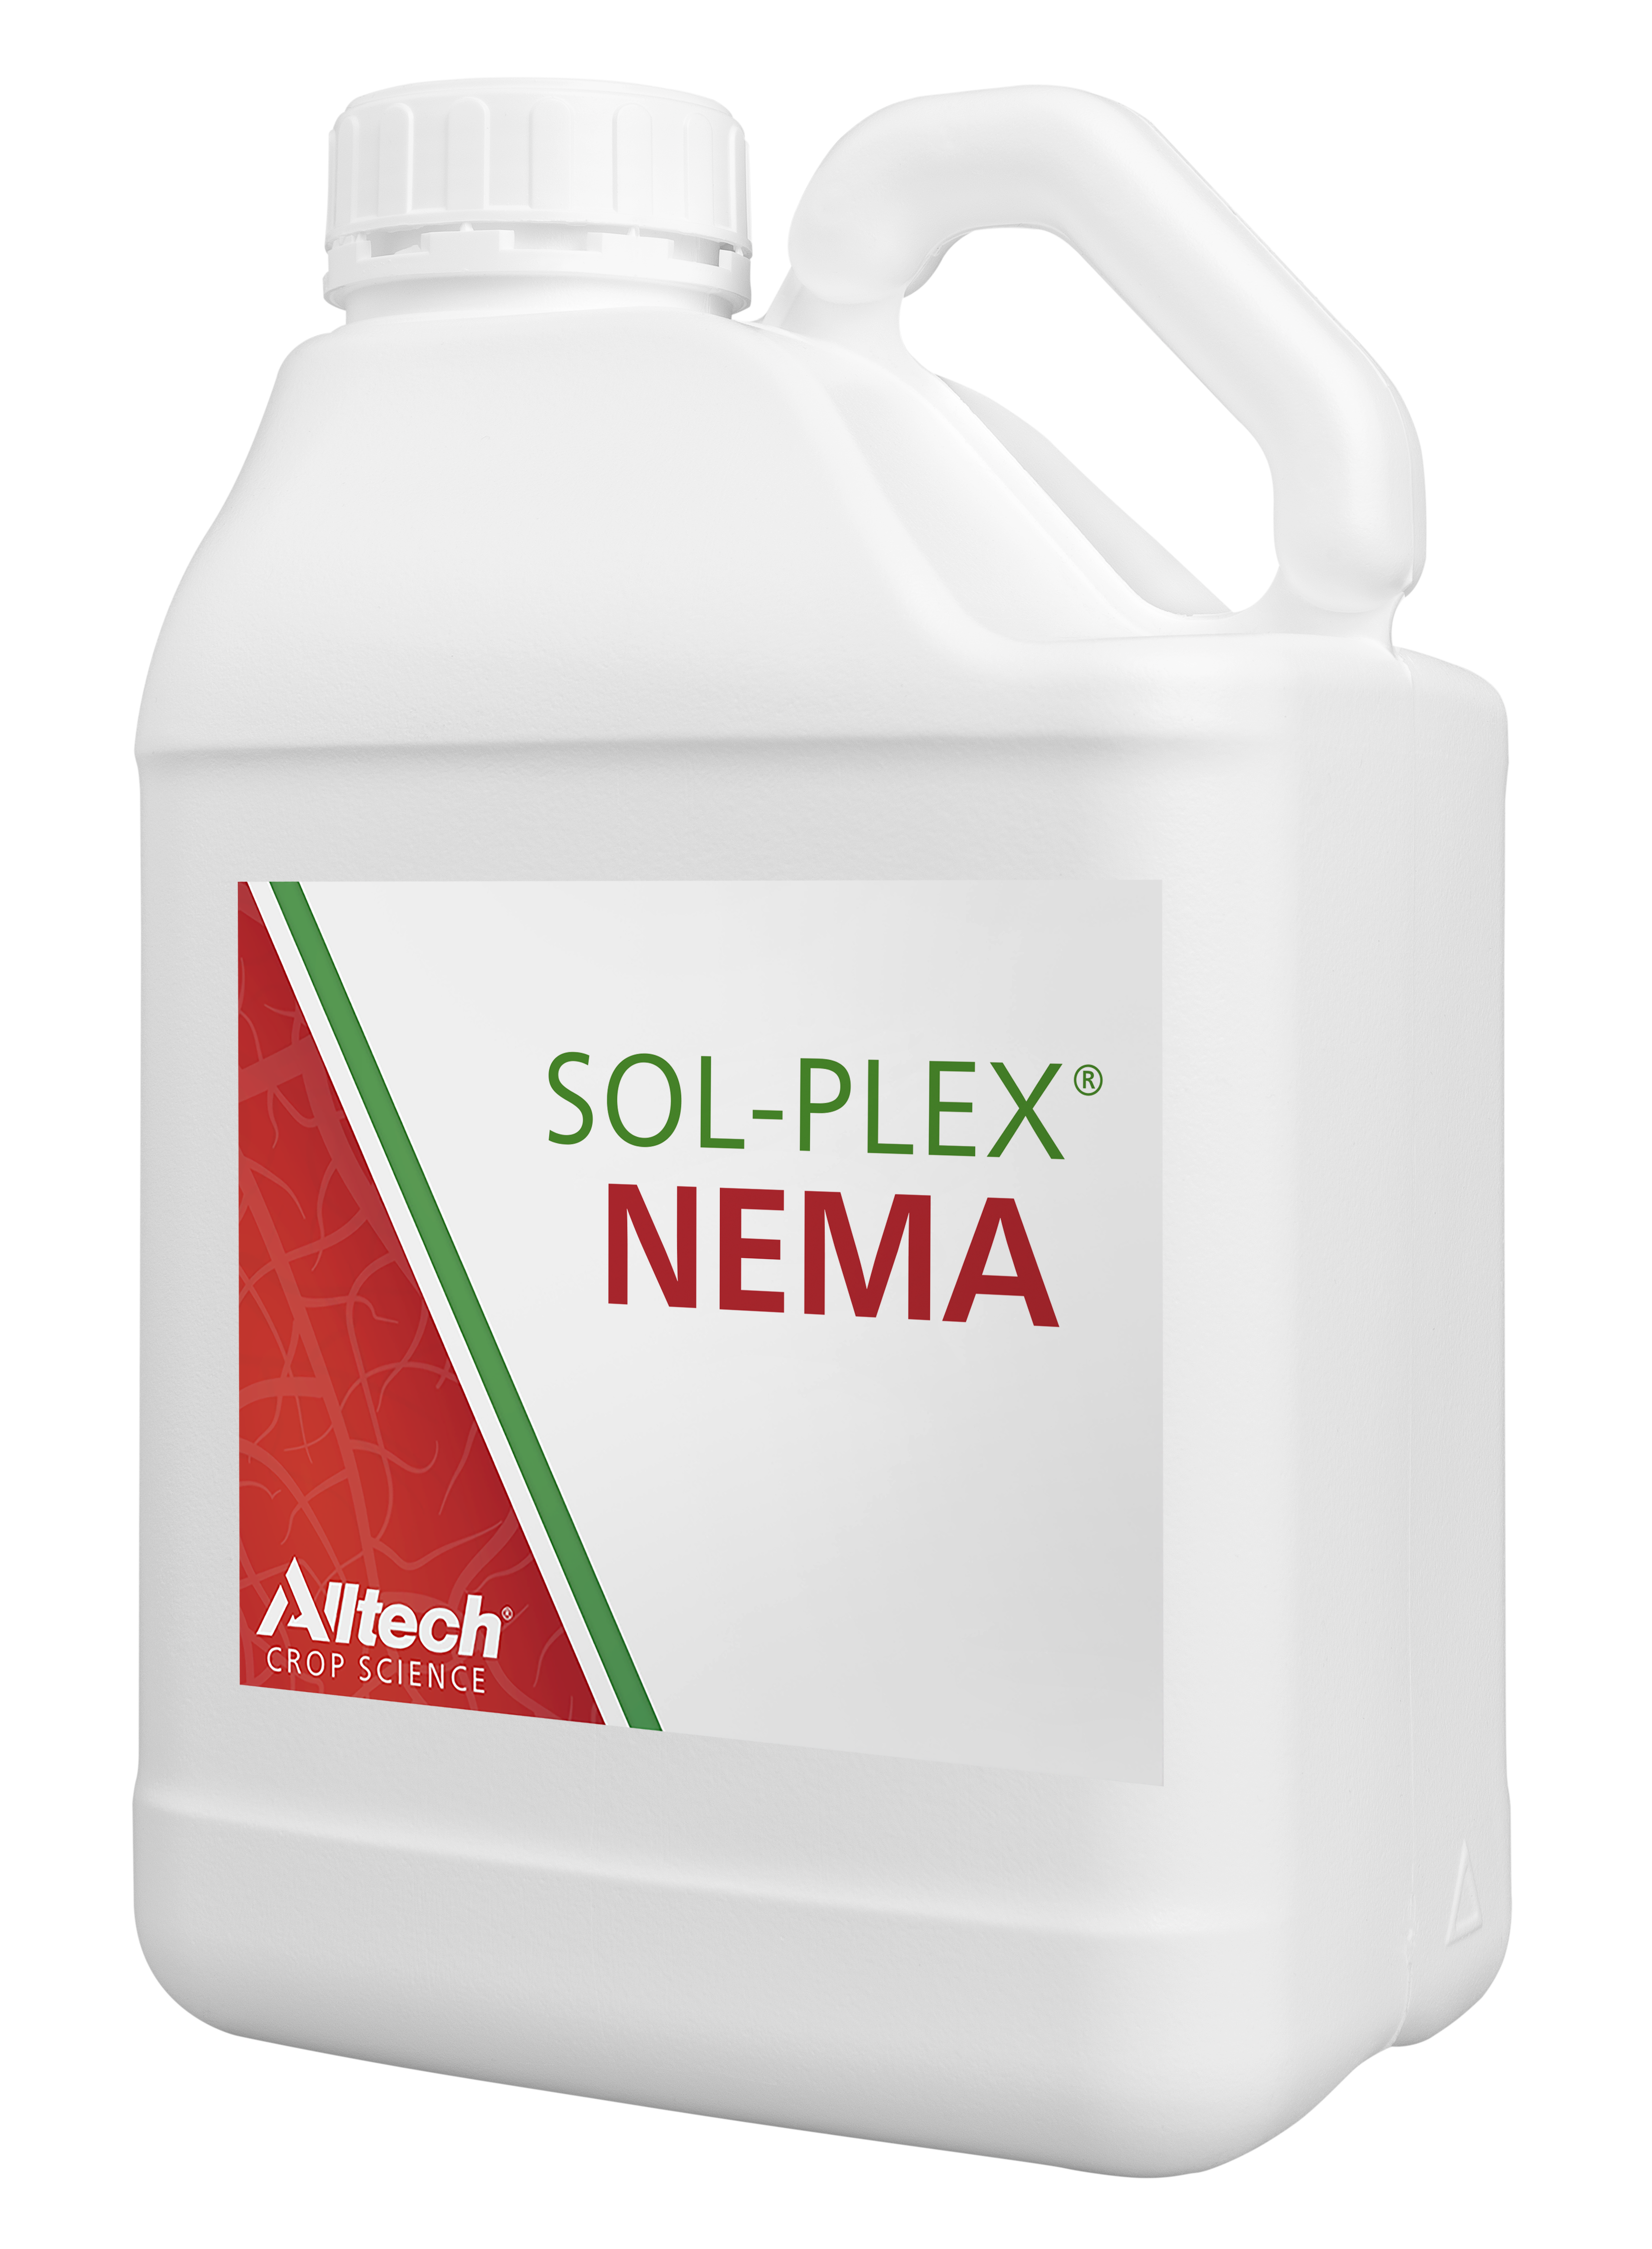 Sol-Plex Nema product image